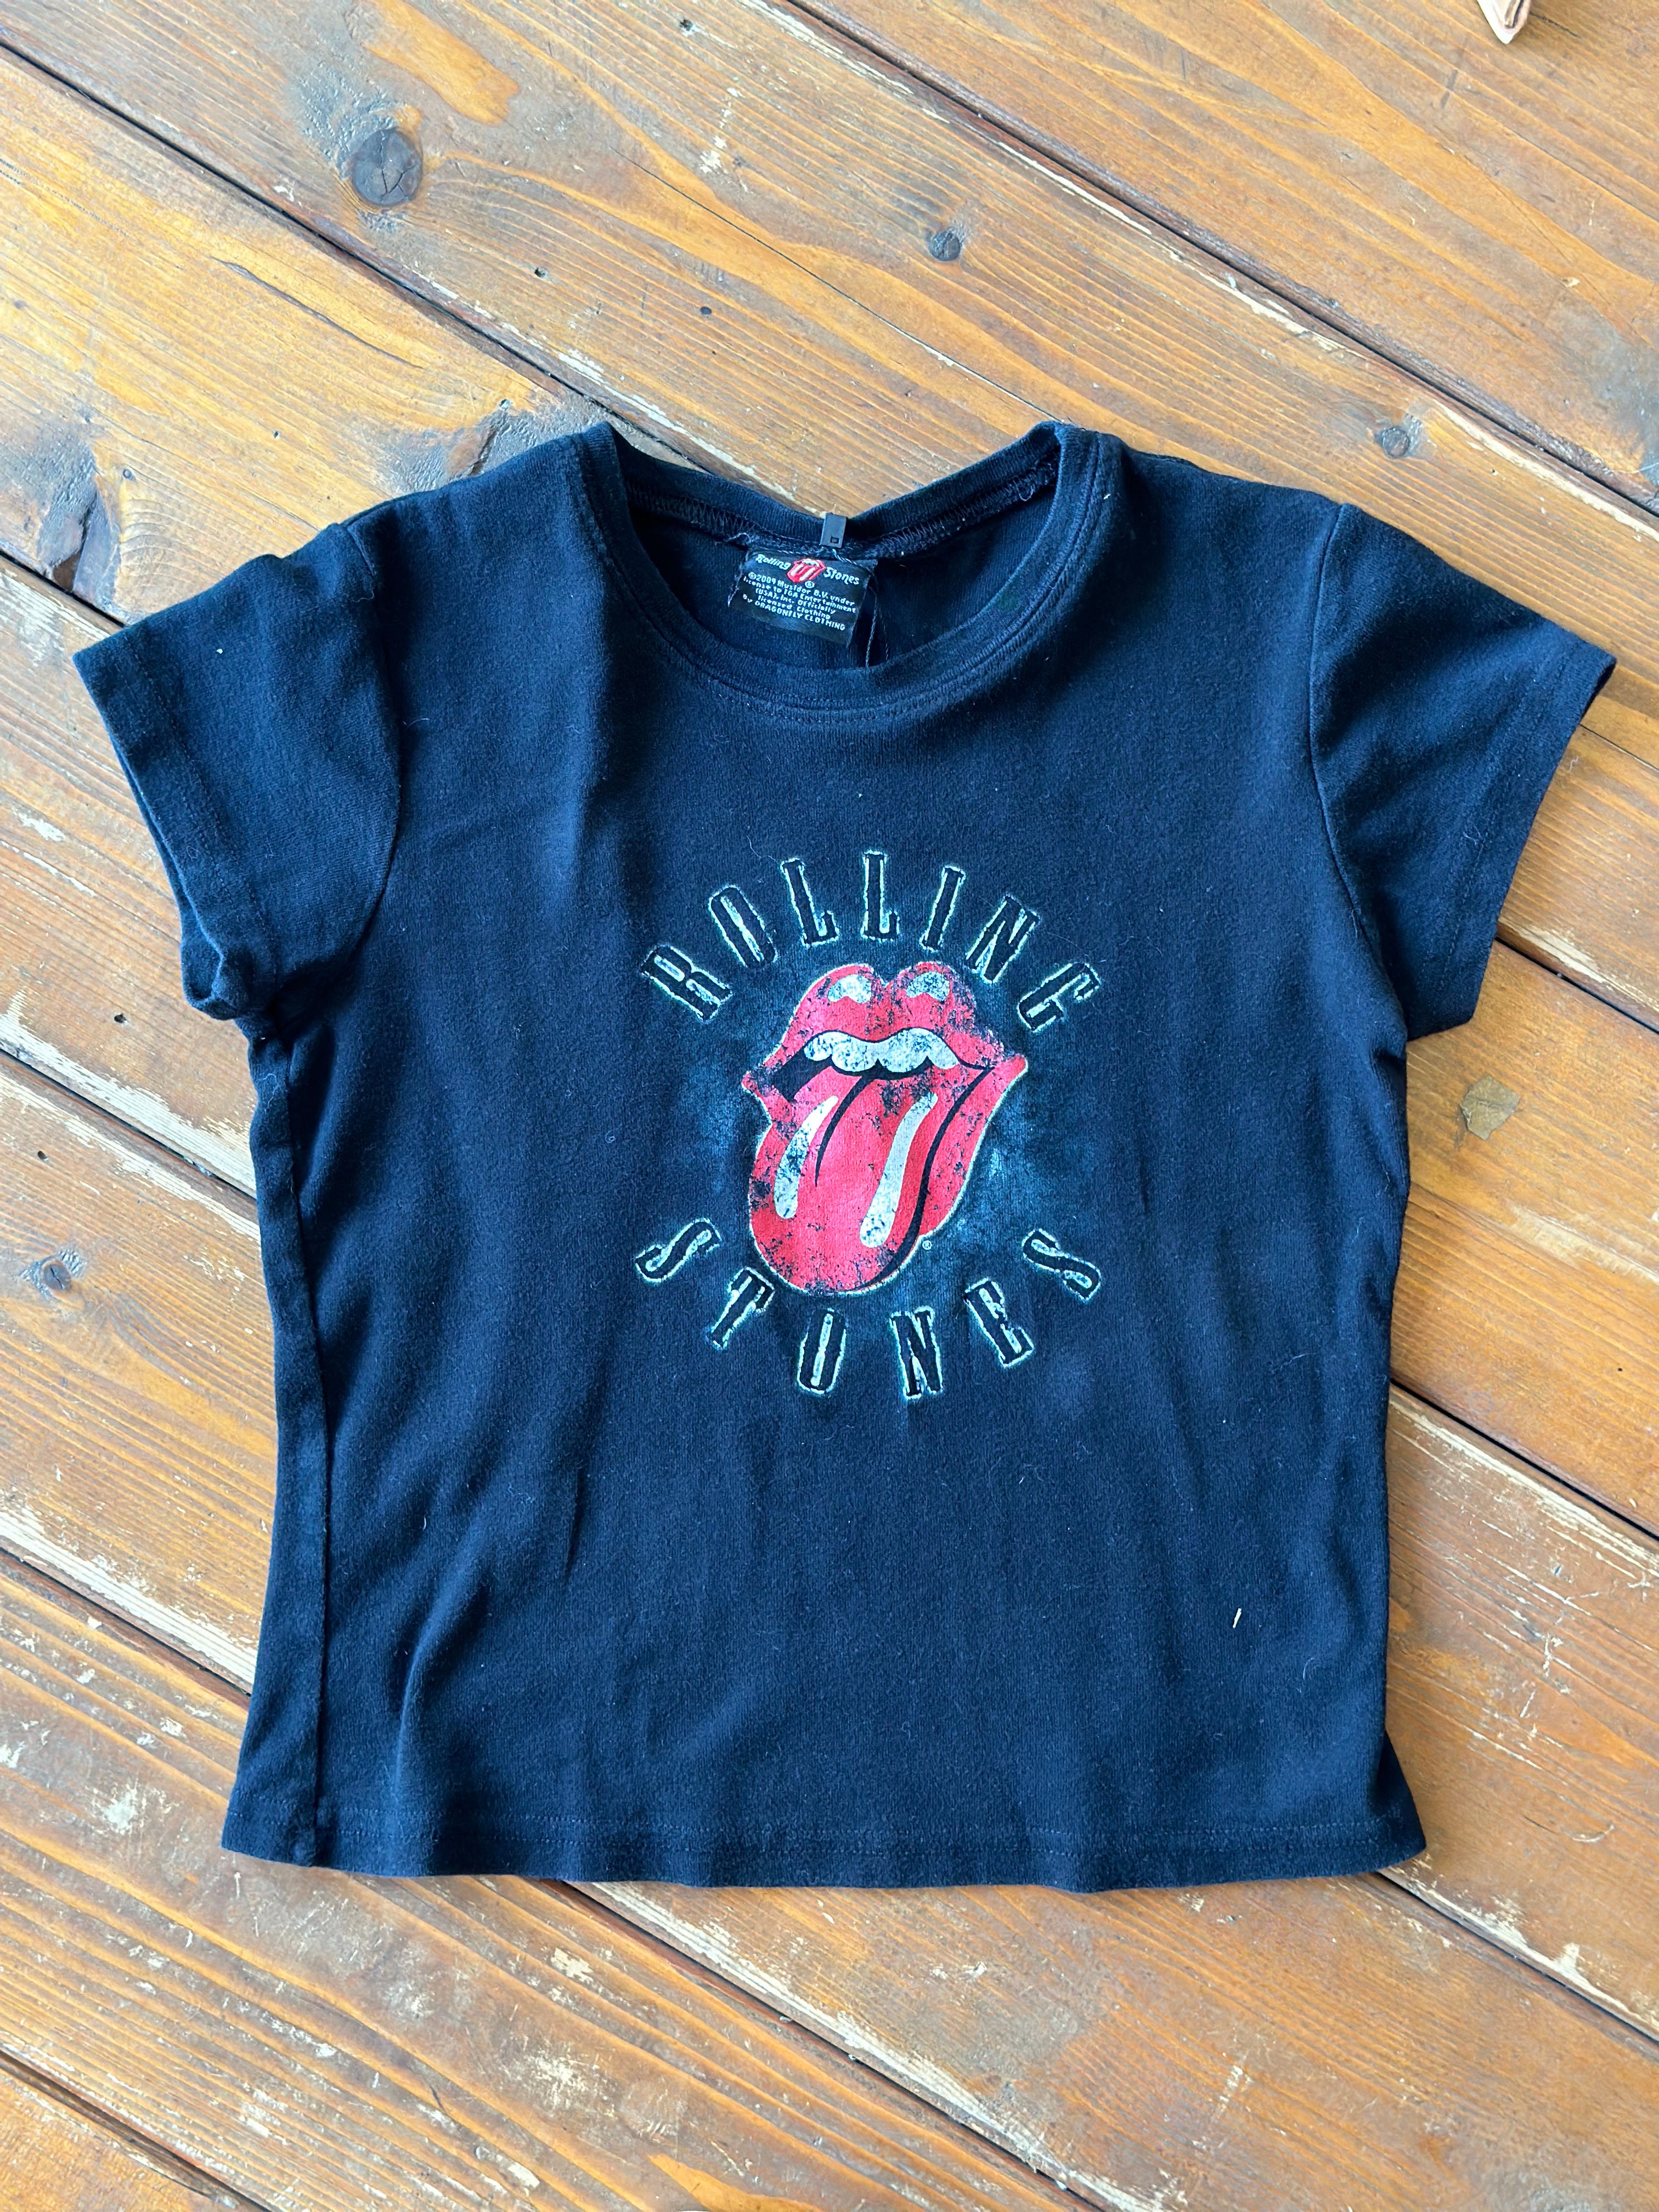 Rolling Stones Tee - SM